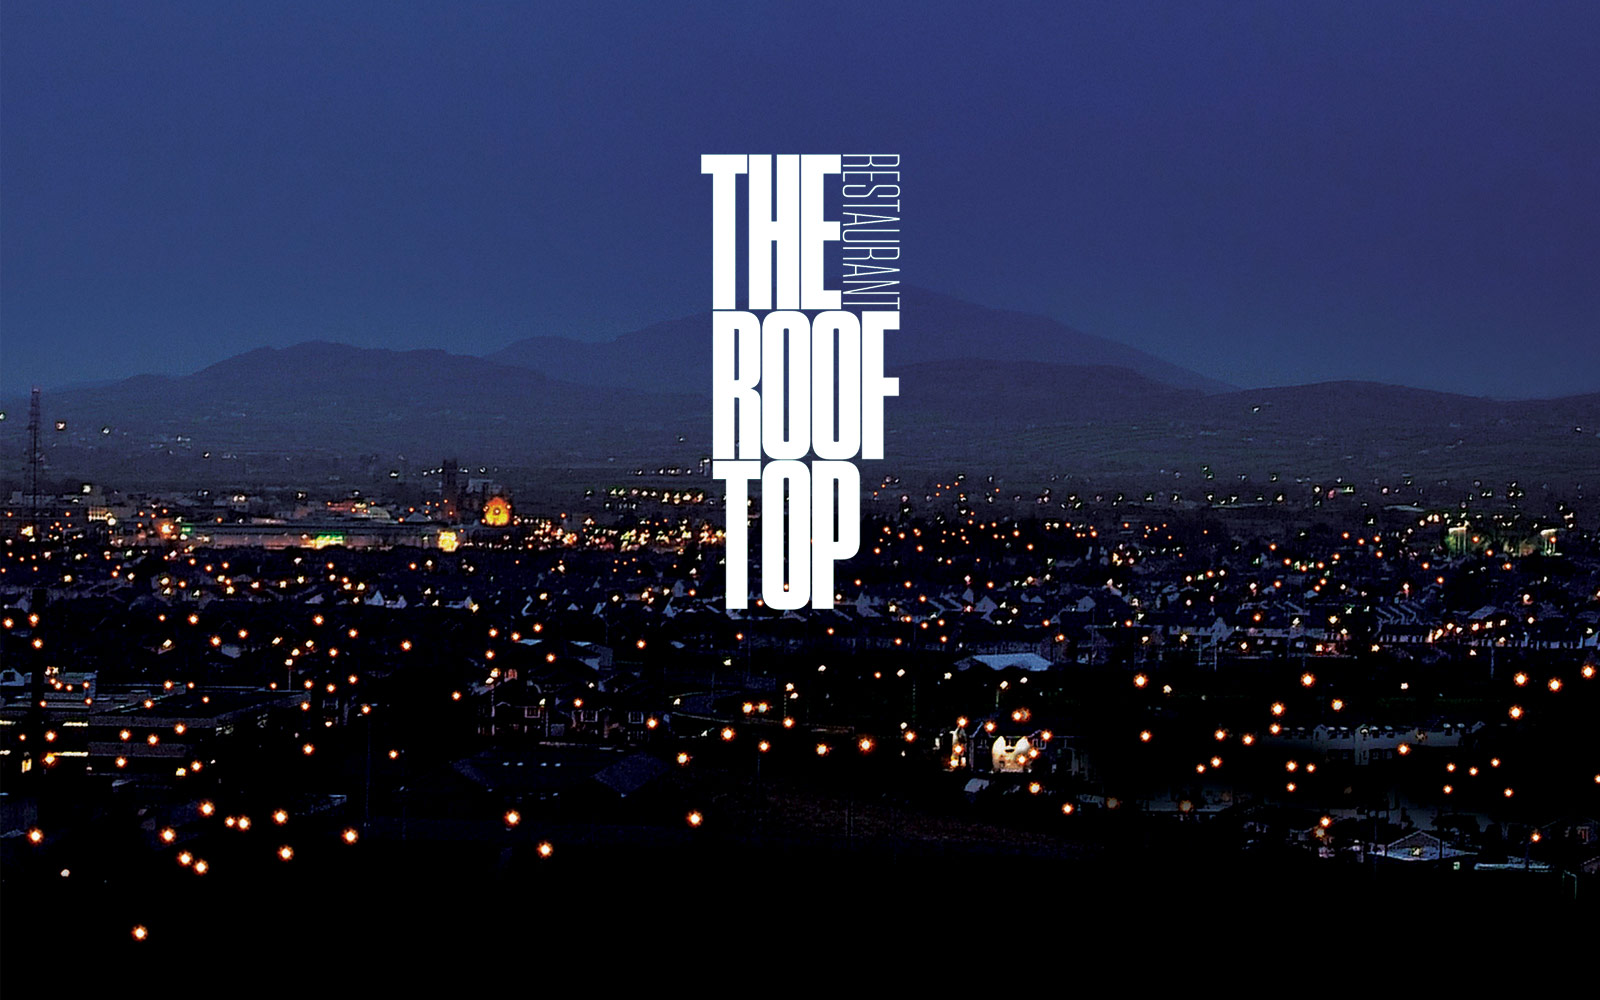 Rooftop Restaurant logo against night sky